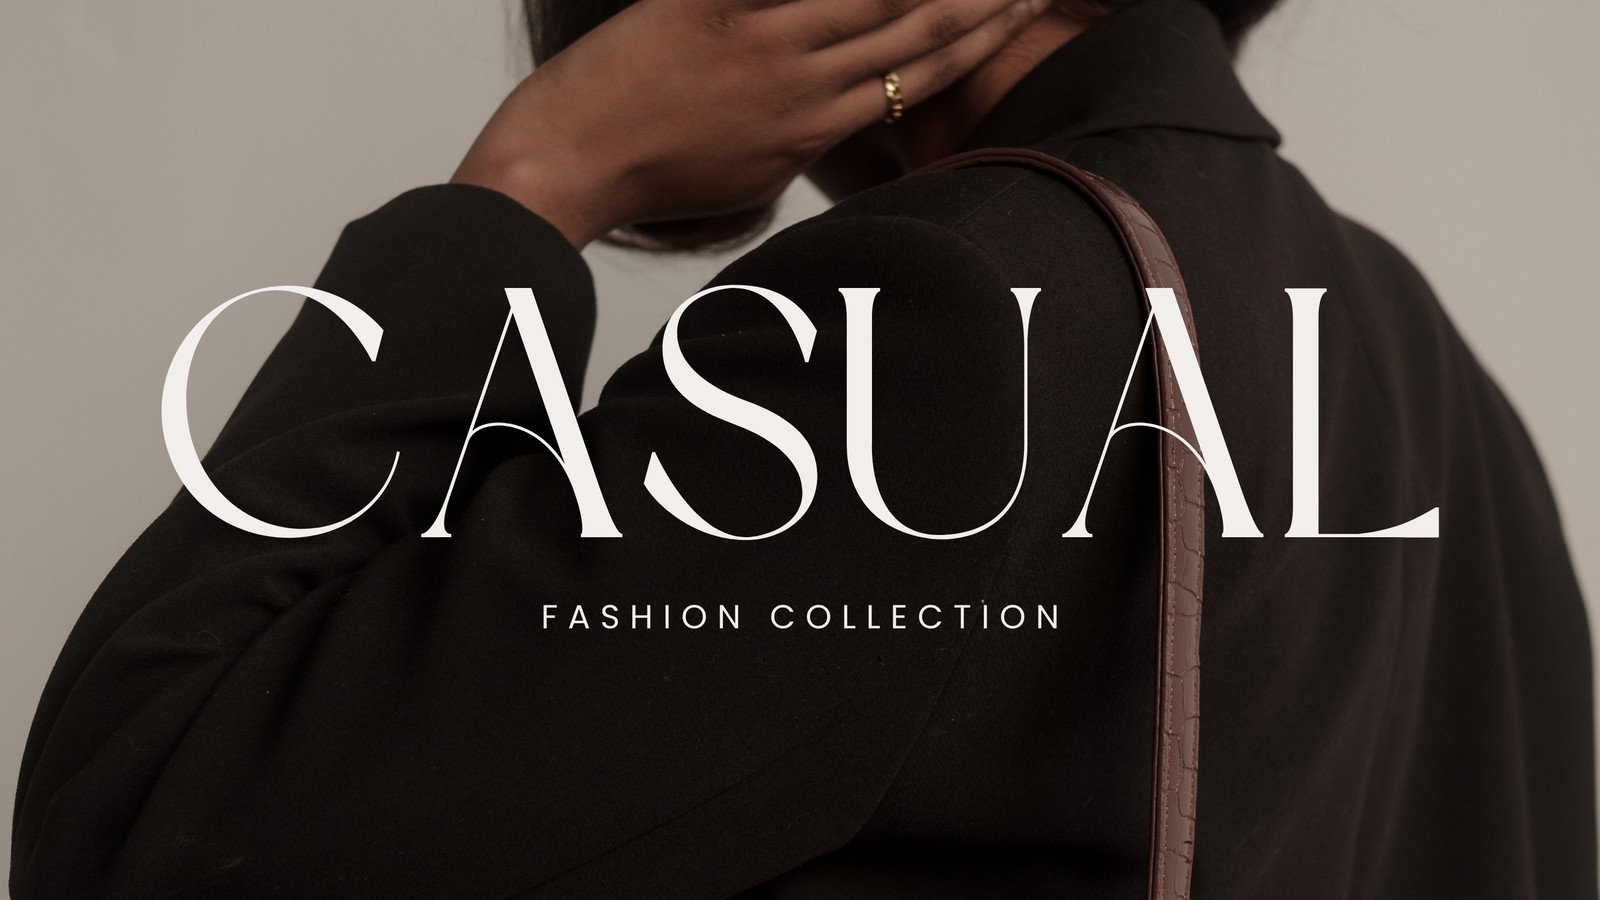 Brown Minimalist Casual Fashion Collection Presentation